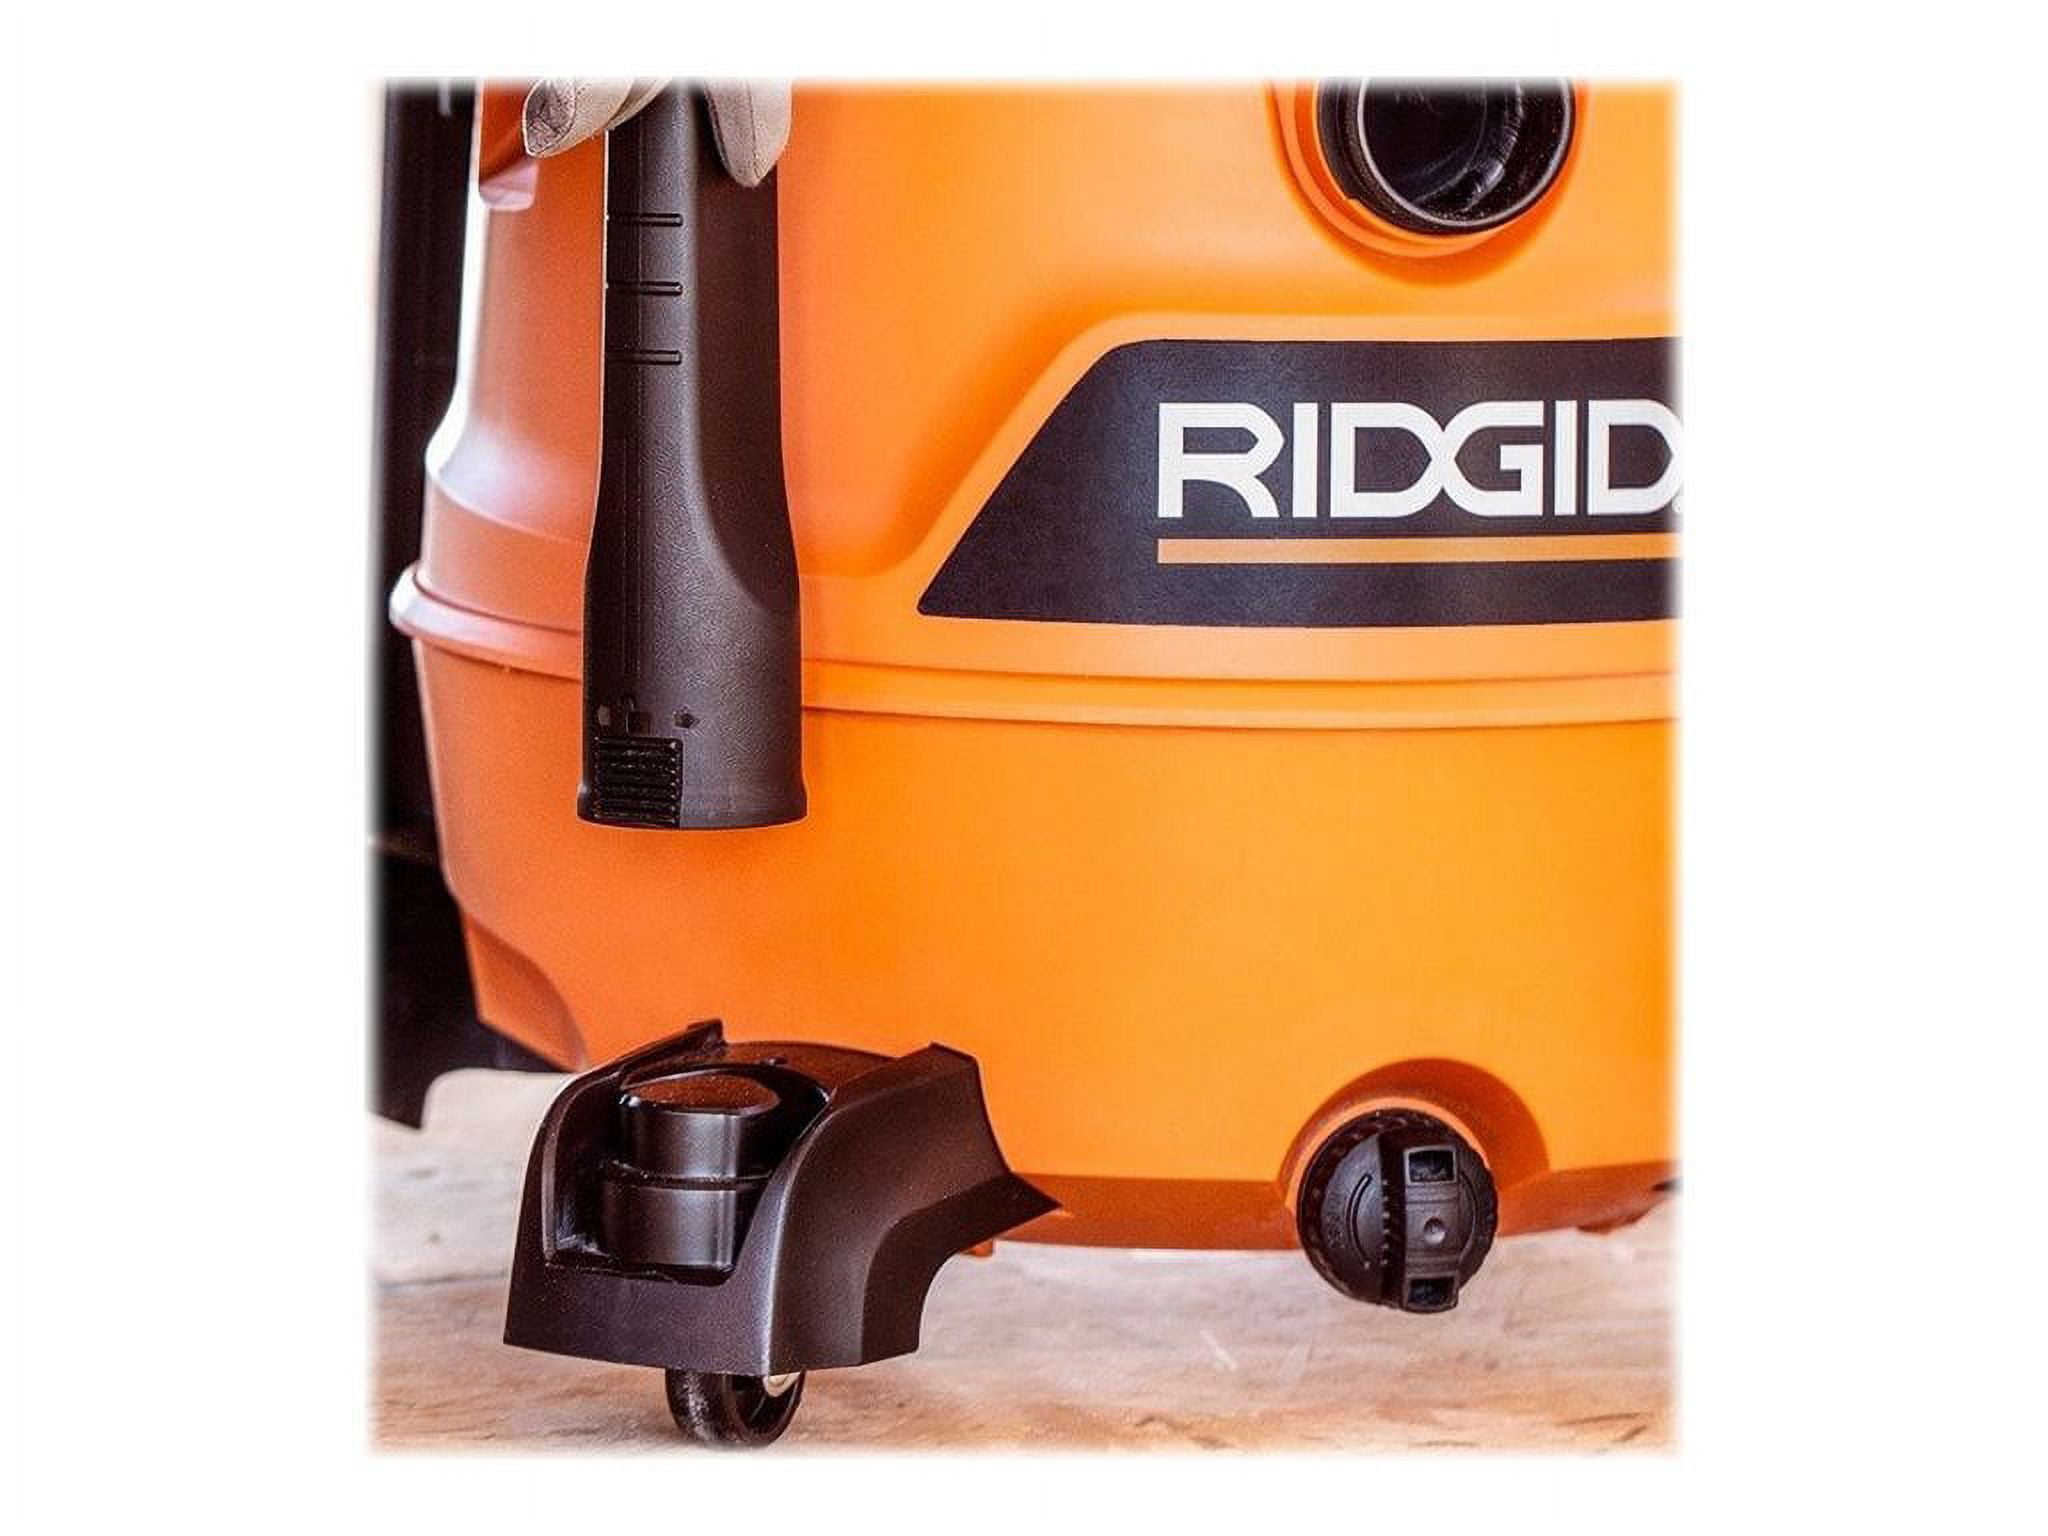 RIDGID HD1800B 16 Gal. 6.5-Peak HP NXT Wet/Dry Shop Vacuum, Fine Dust  Filter, Locking Hose, Accessories and Premium Car Cleaning Kit